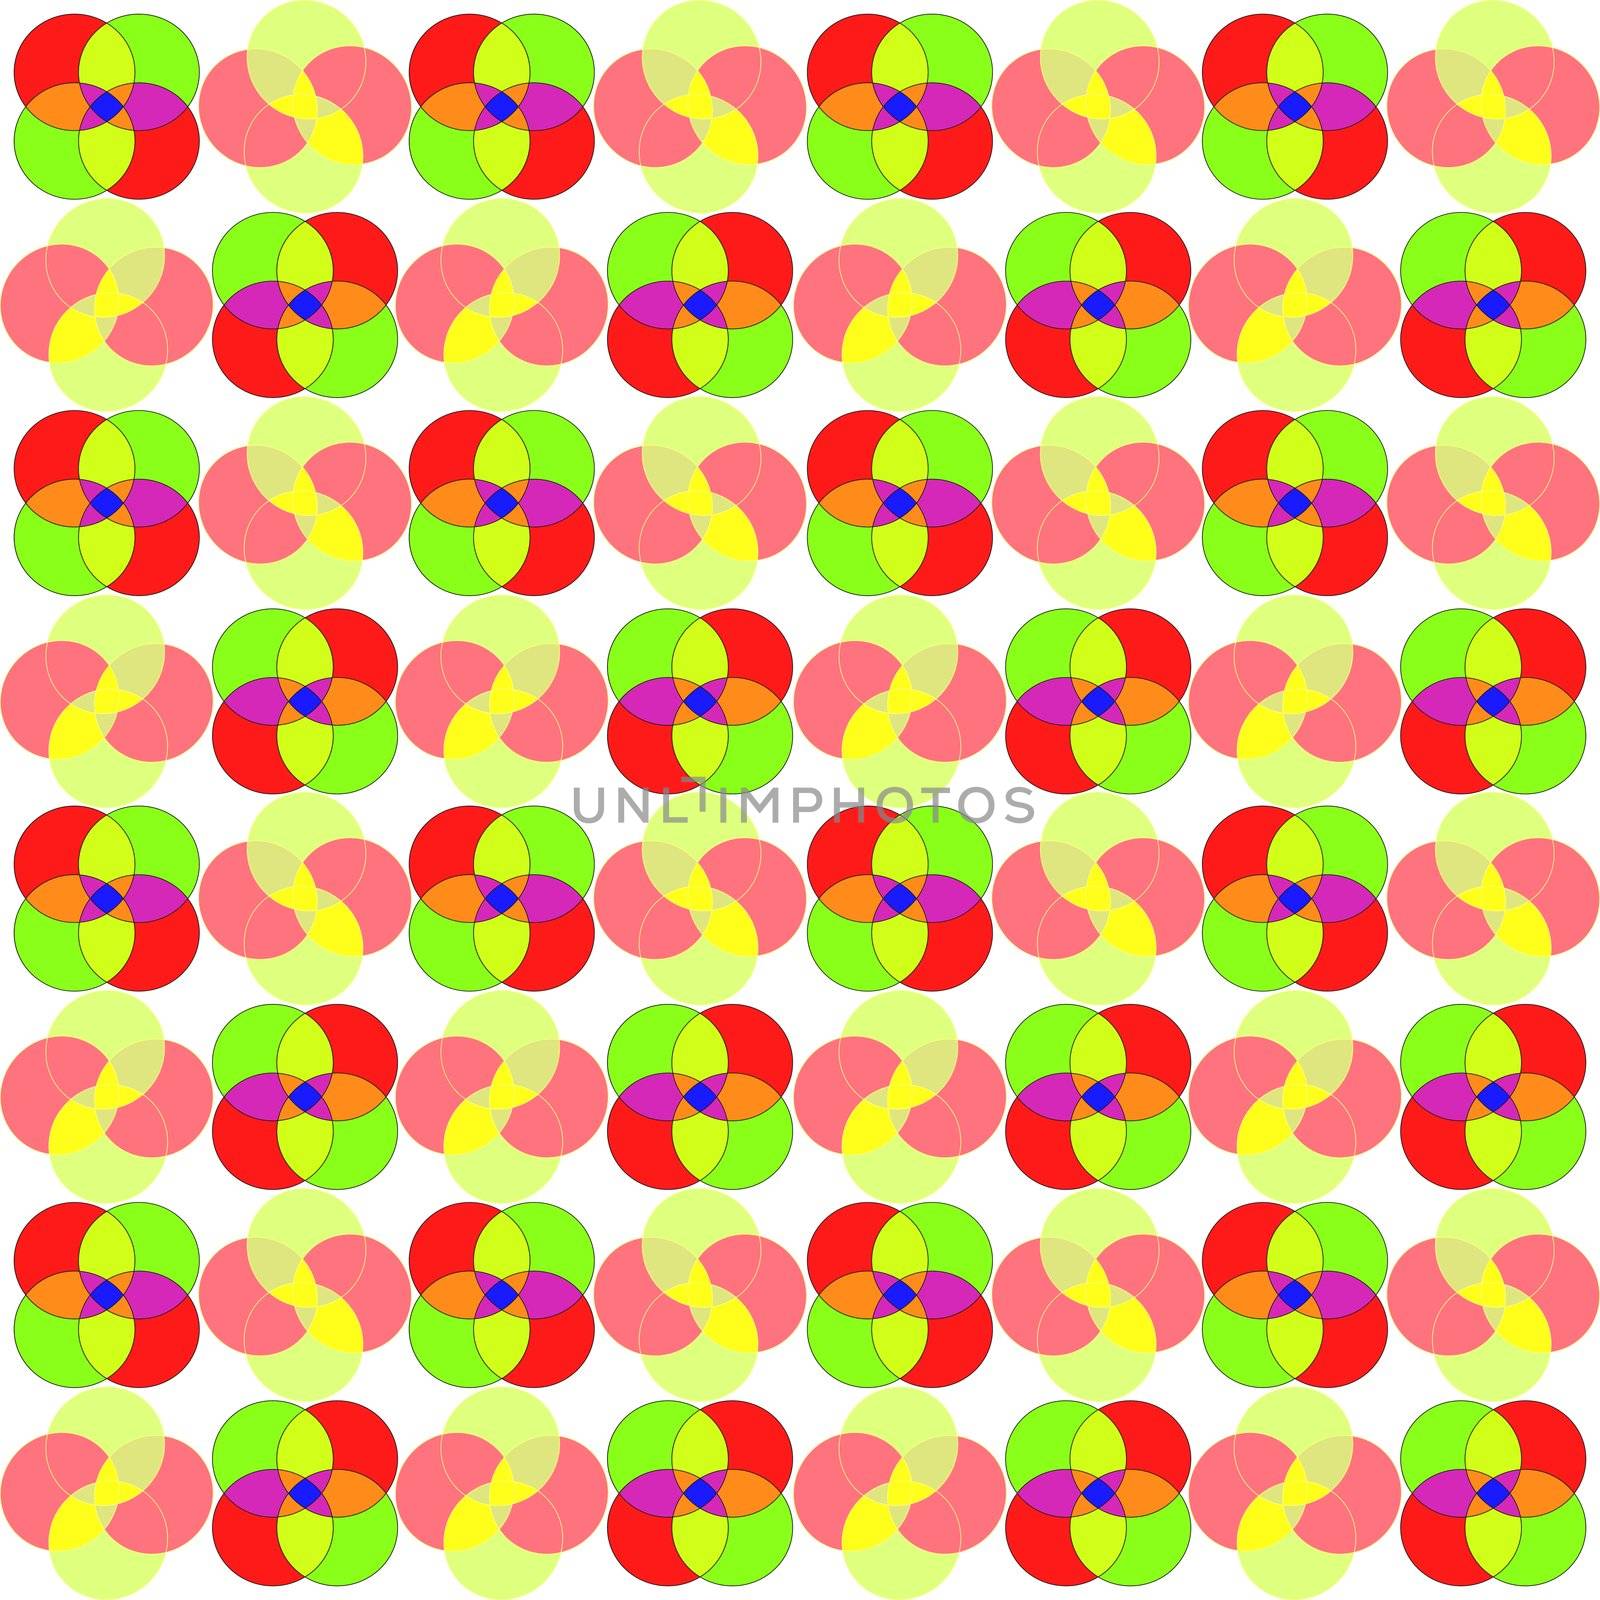 circles seamless abstract pattern by robertosch